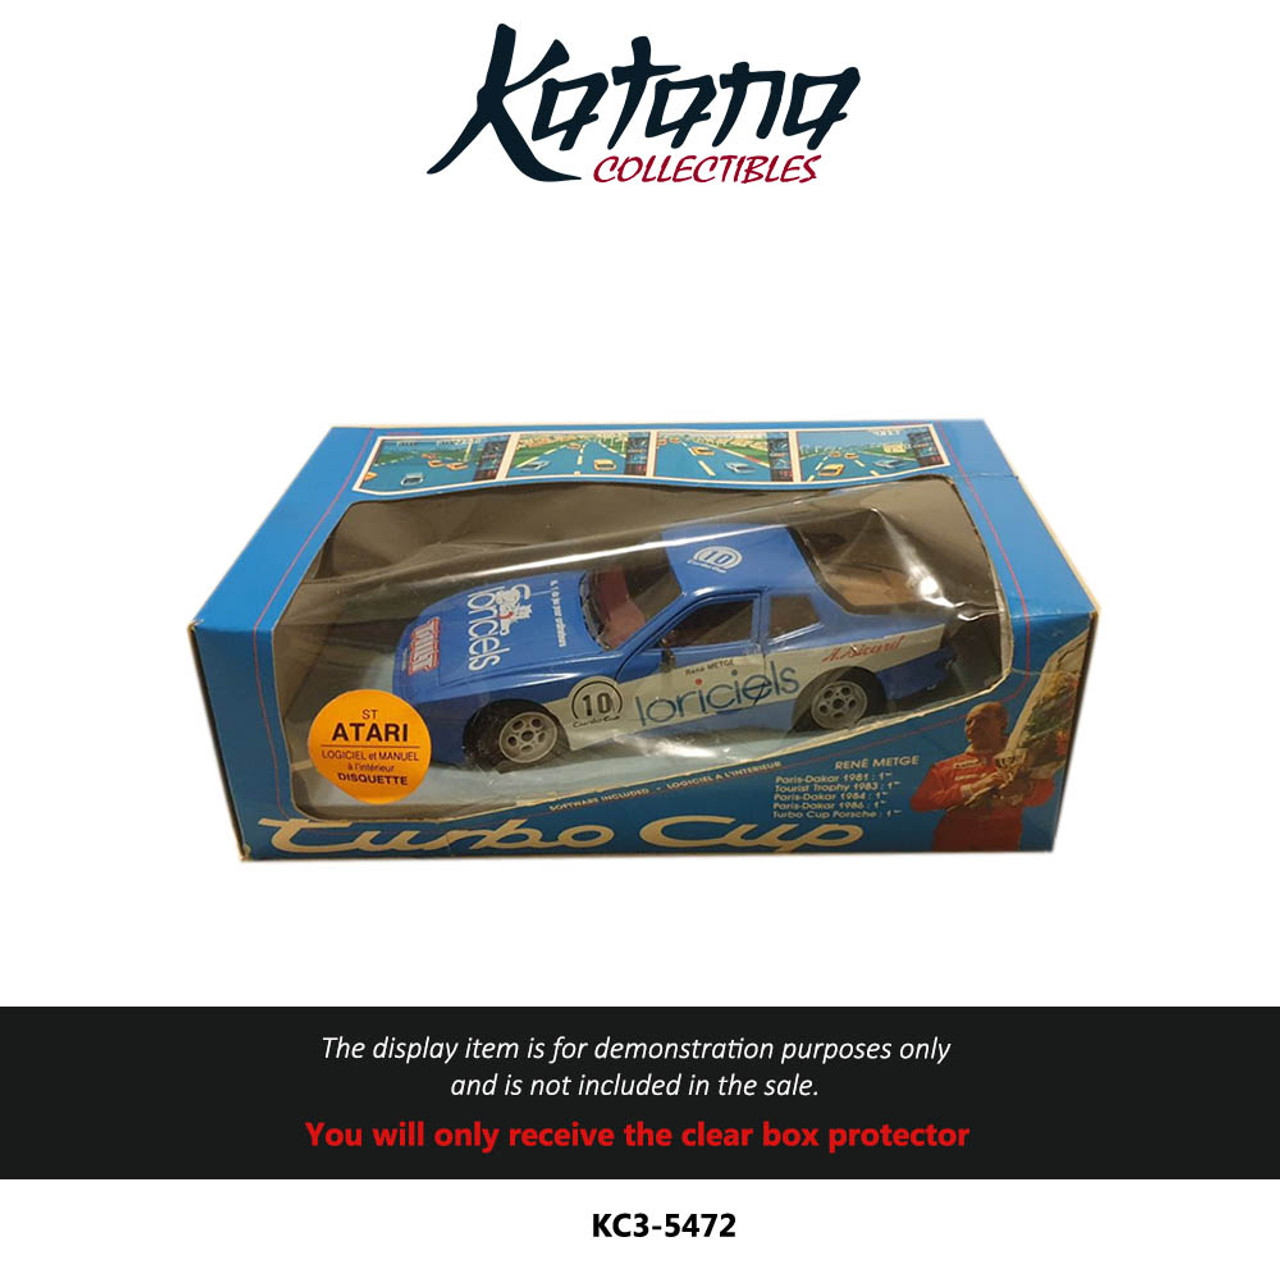 Katana Collectibles Protector For Turbo Cup Game Atari Box